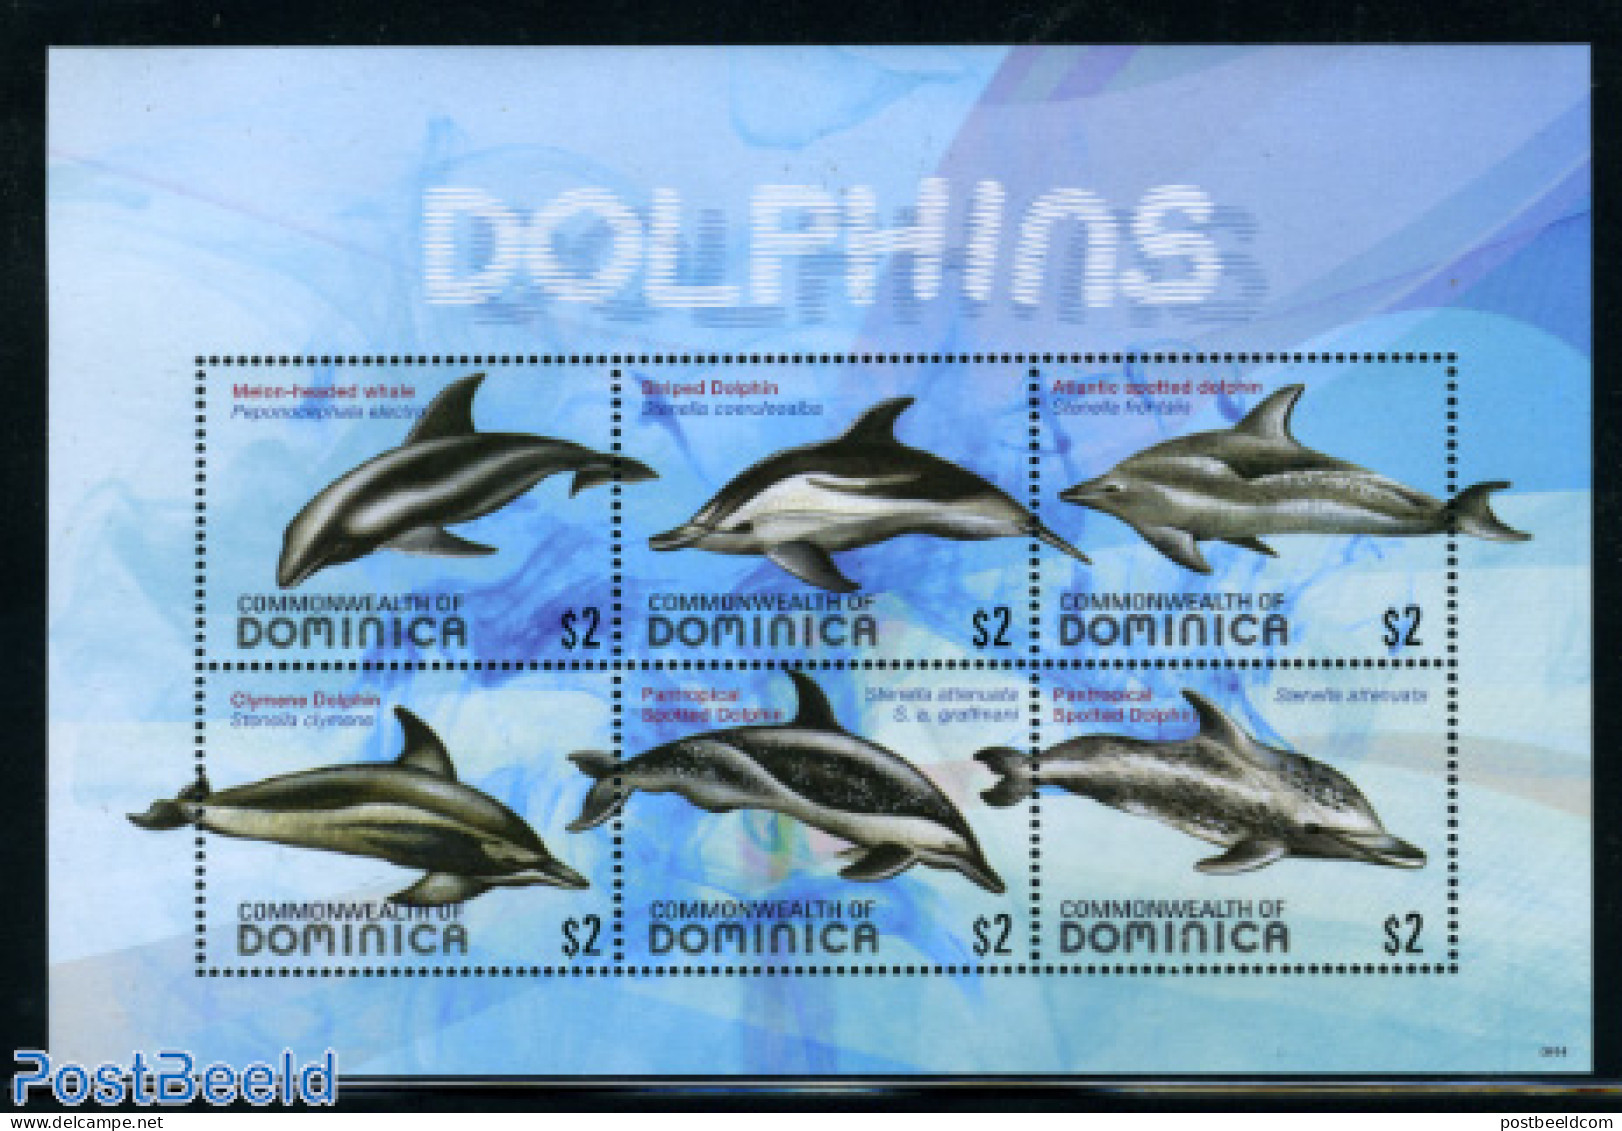 Dominica 2009 Dolphins 6v M/s, Mint NH, Nature - Sea Mammals - Dominikanische Rep.